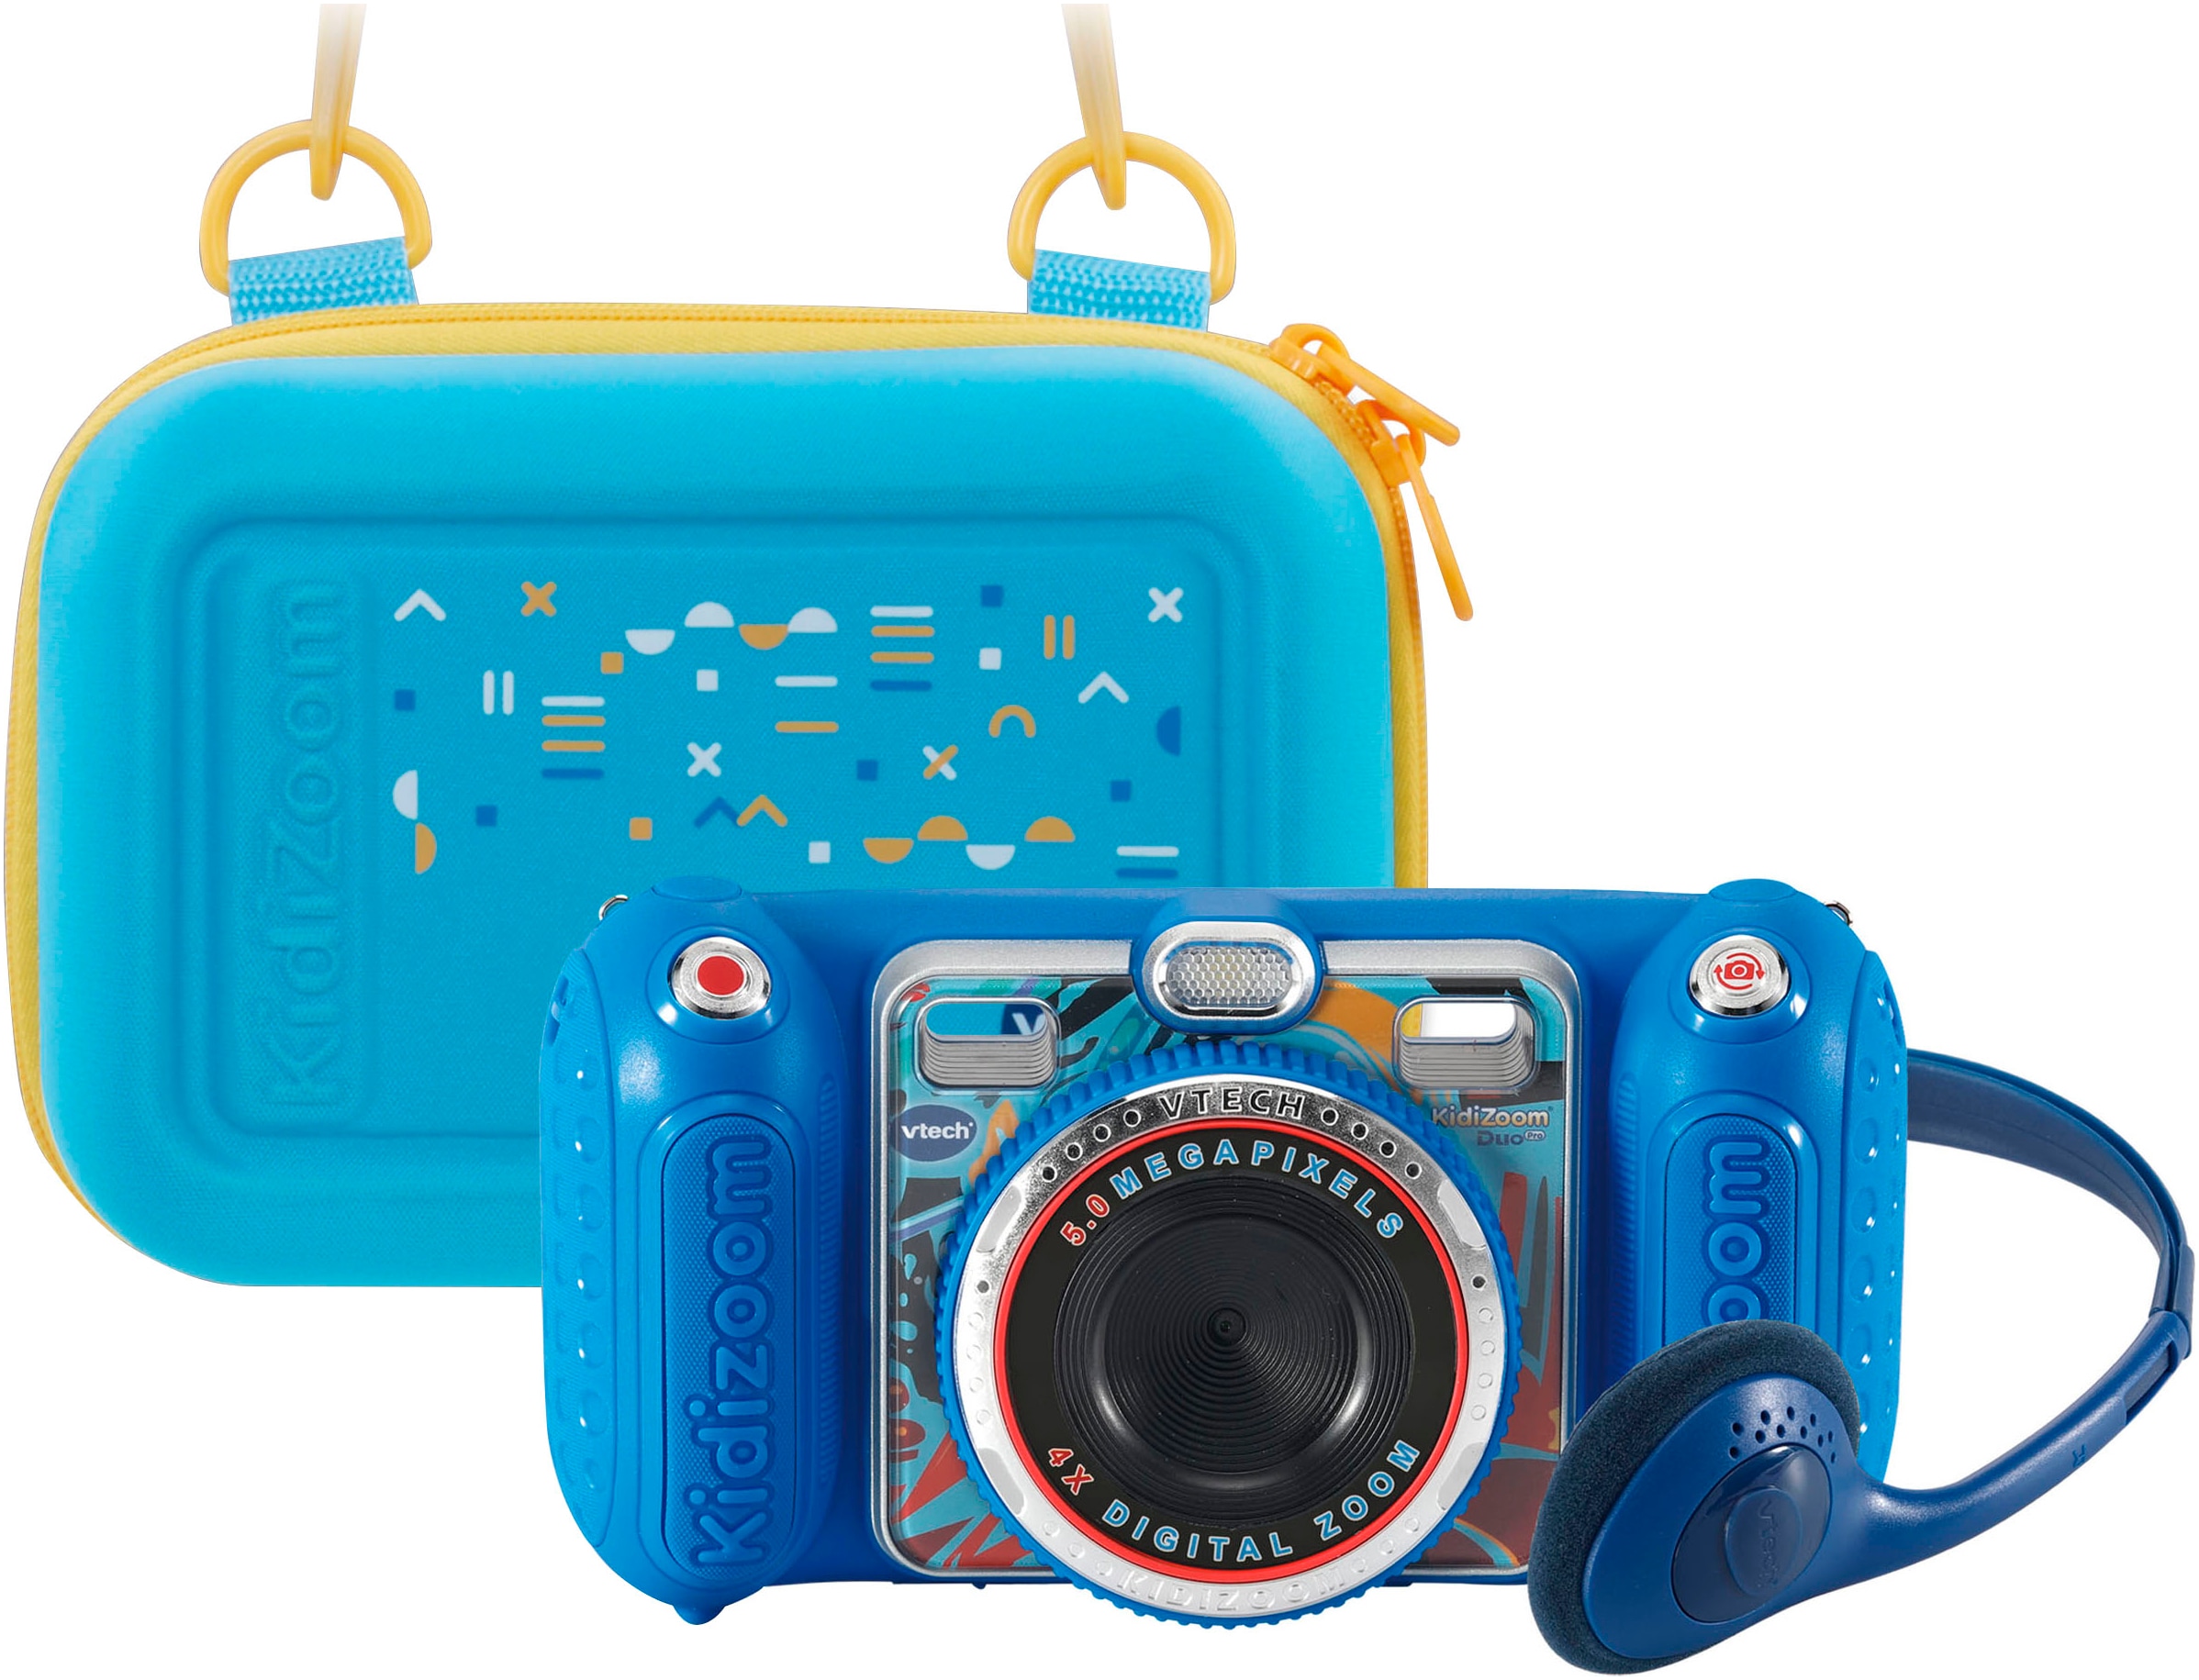 Kinderkamera »KidiZoom Duo Pro, blau«, inklusive Tragetasche